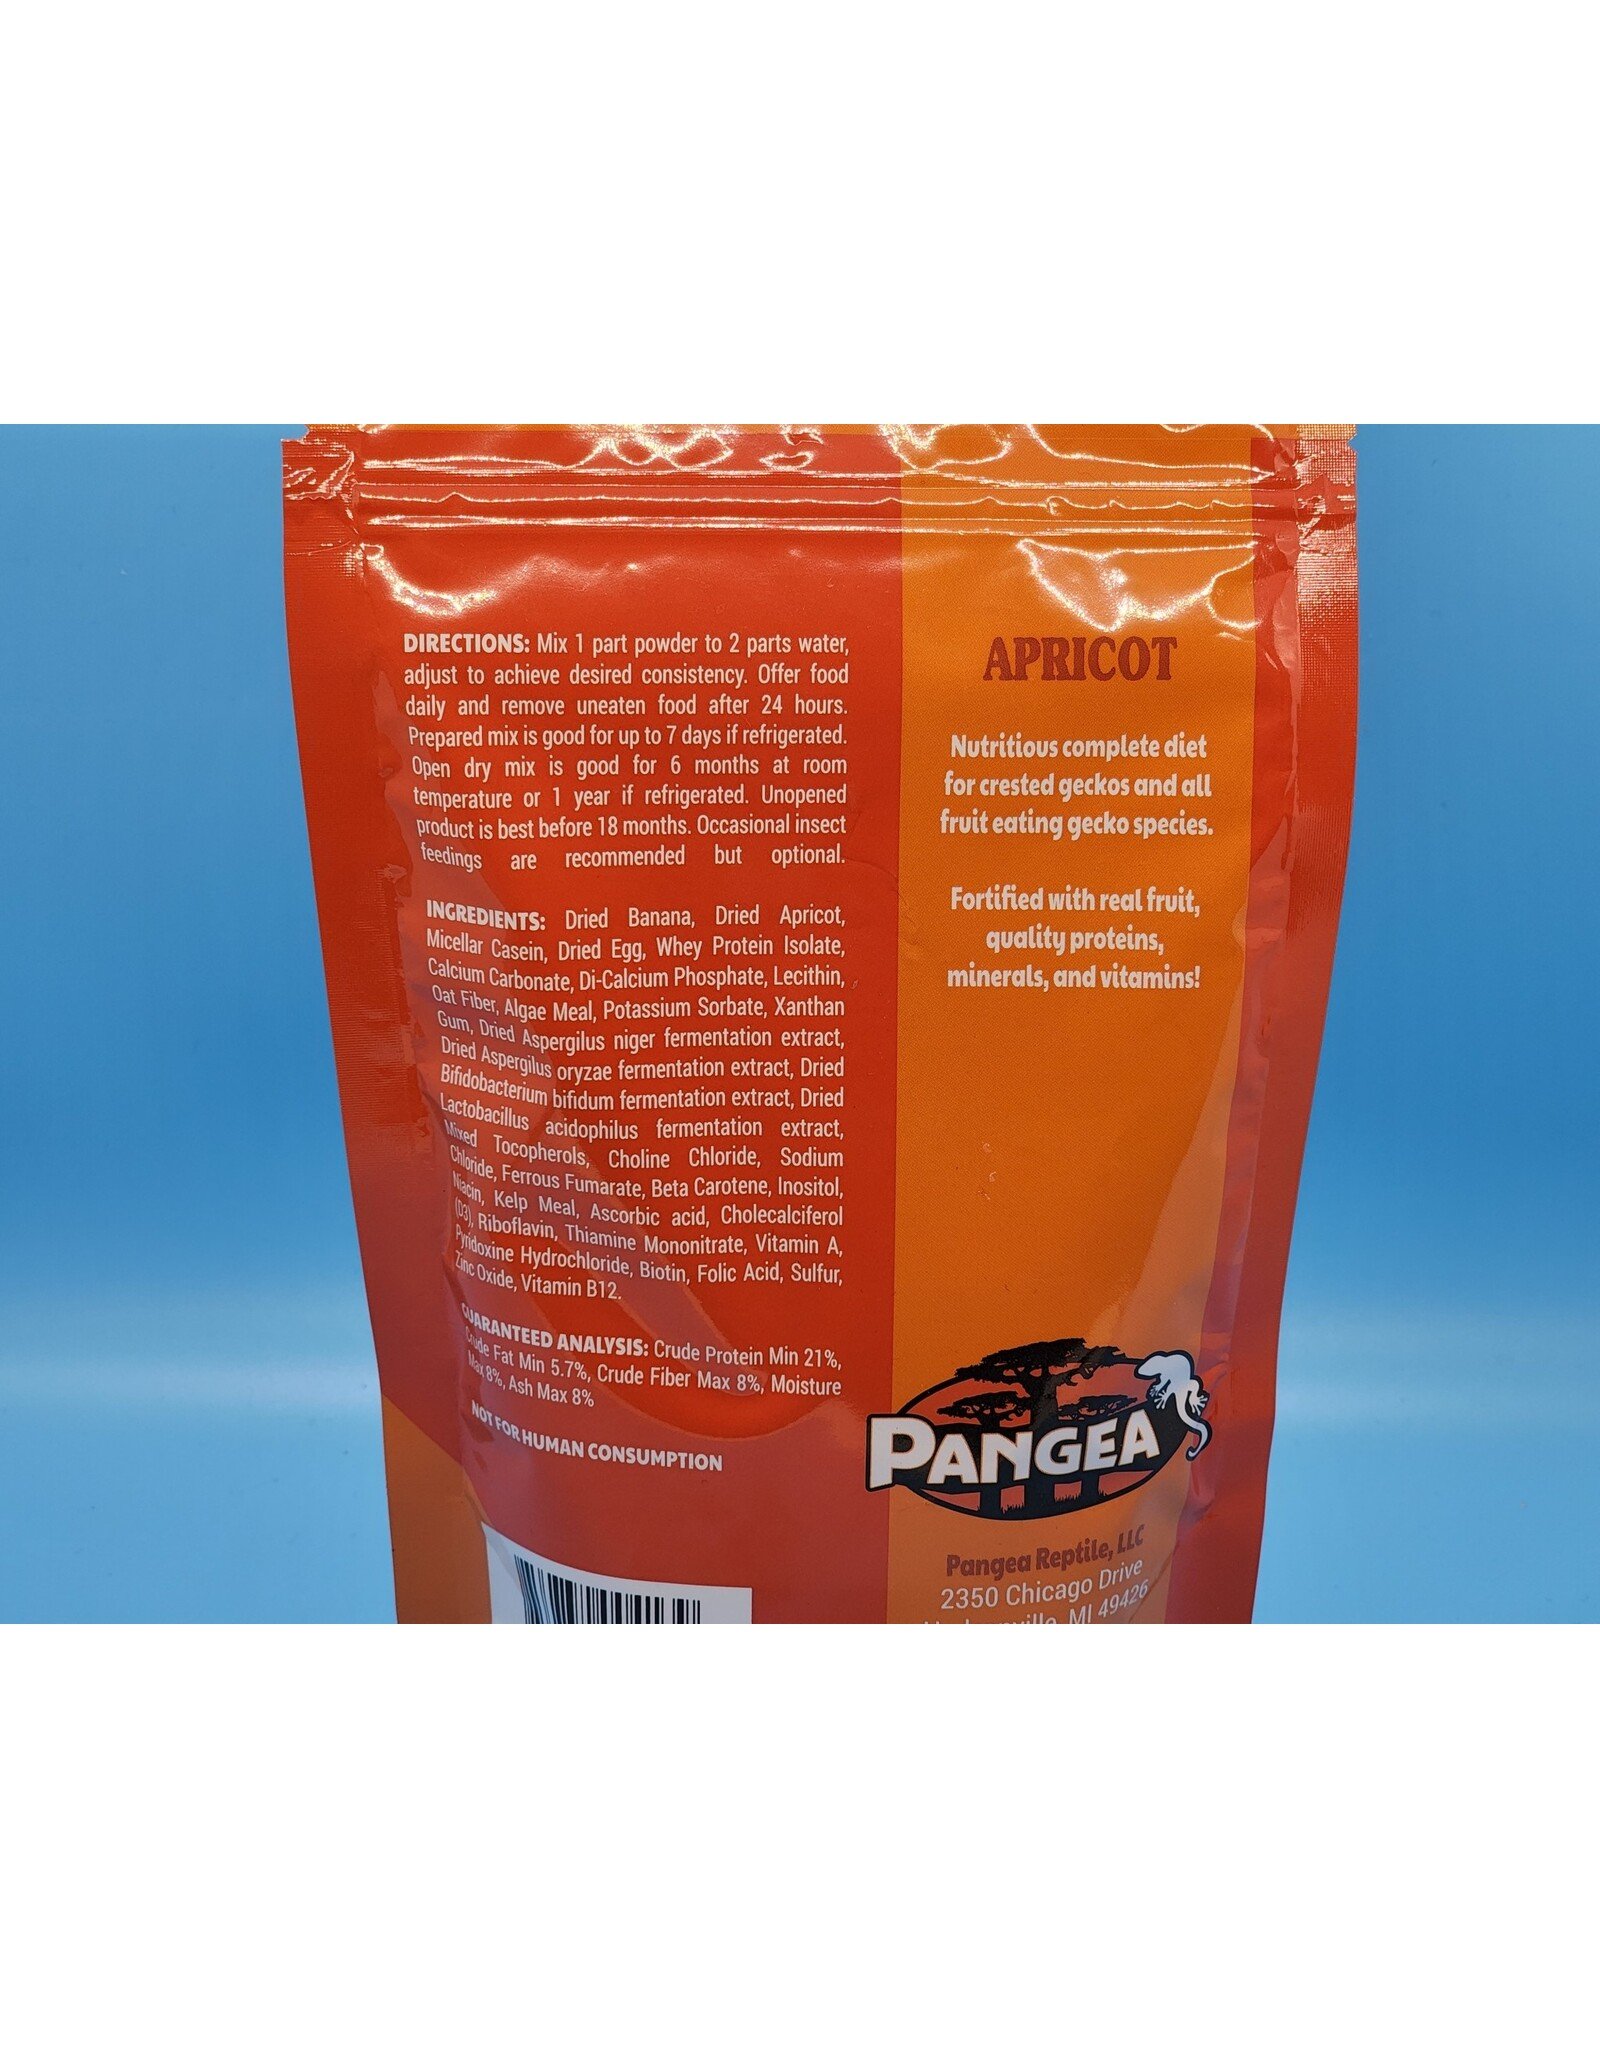 Pangea Pangea Gecko Diet Apricot 8oz